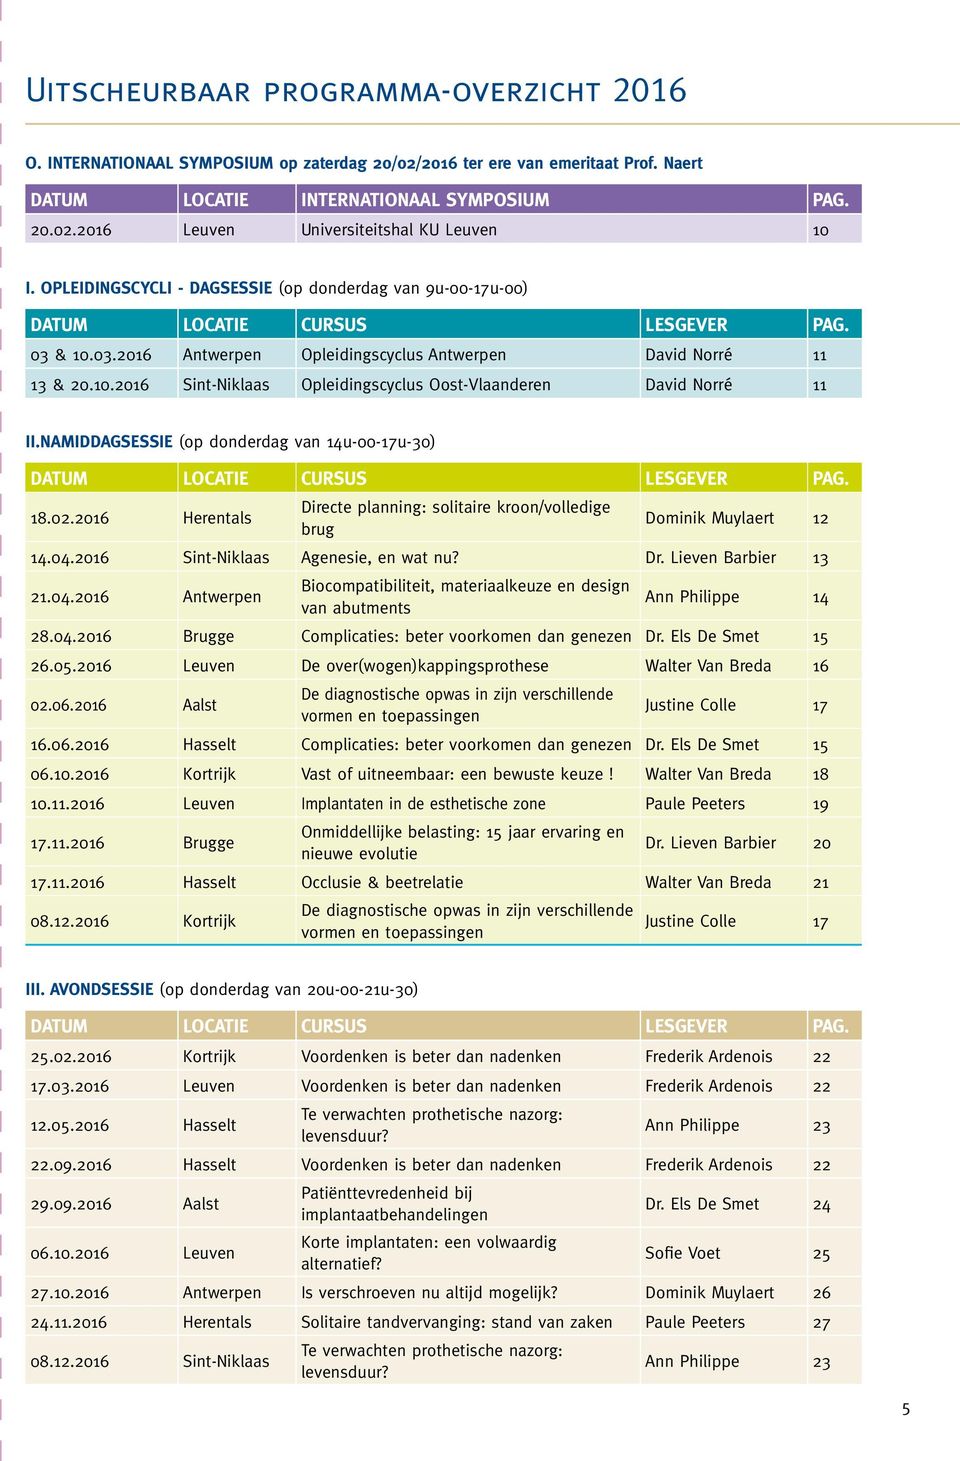 NAMIDDAGSESSIE (op donderdag van 14u-00-17u-30) DATUM LOCATIE CURSUS LESGEVER PAG. 18.02.2016 Herentals Directe planning: solitaire kroon/volledige brug Dominik Muylaert 12 14.04.